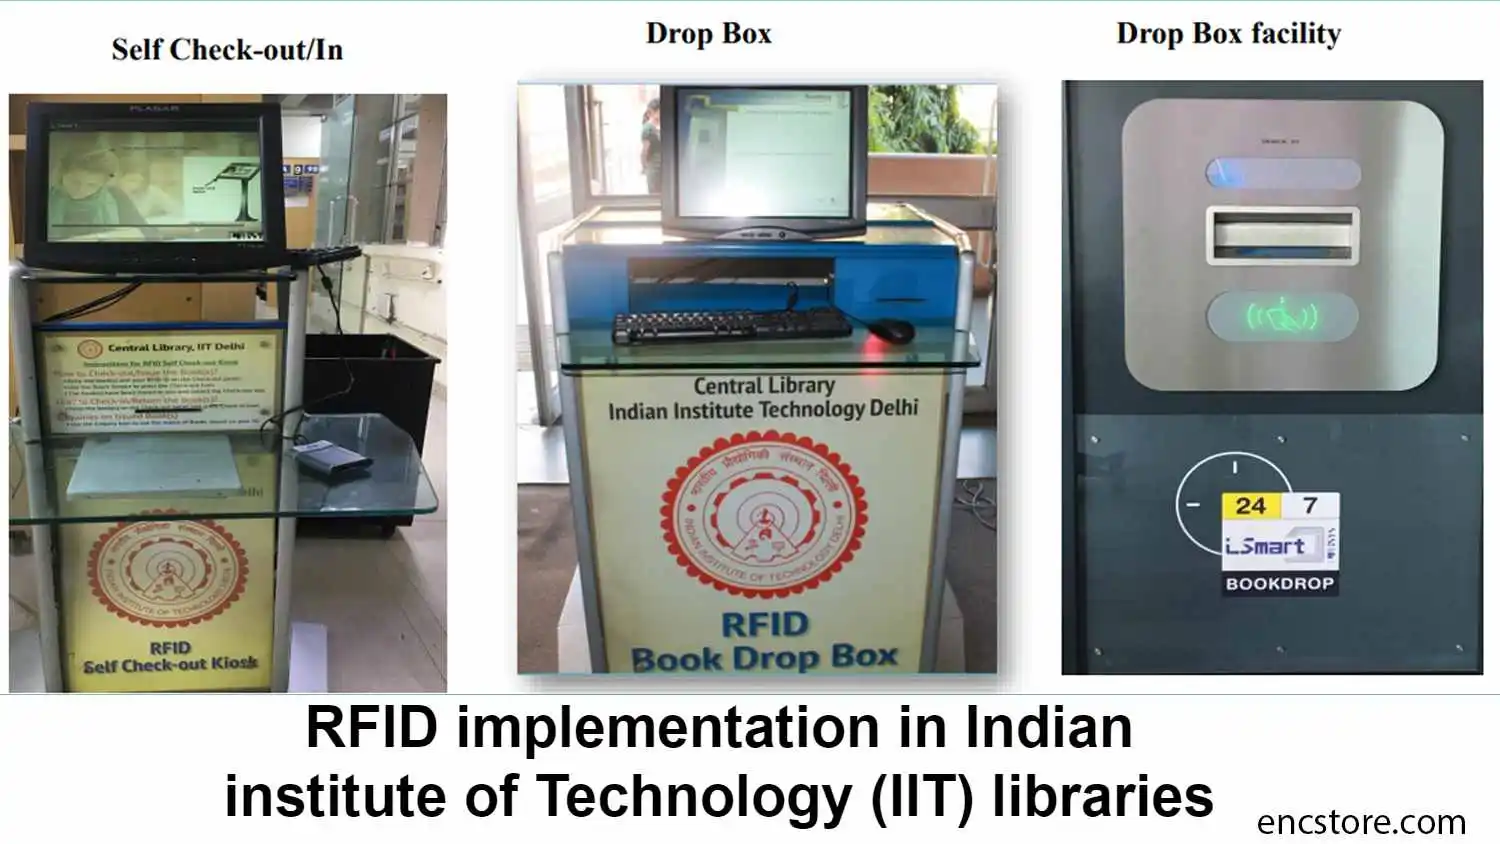 RFID implementation in IIT